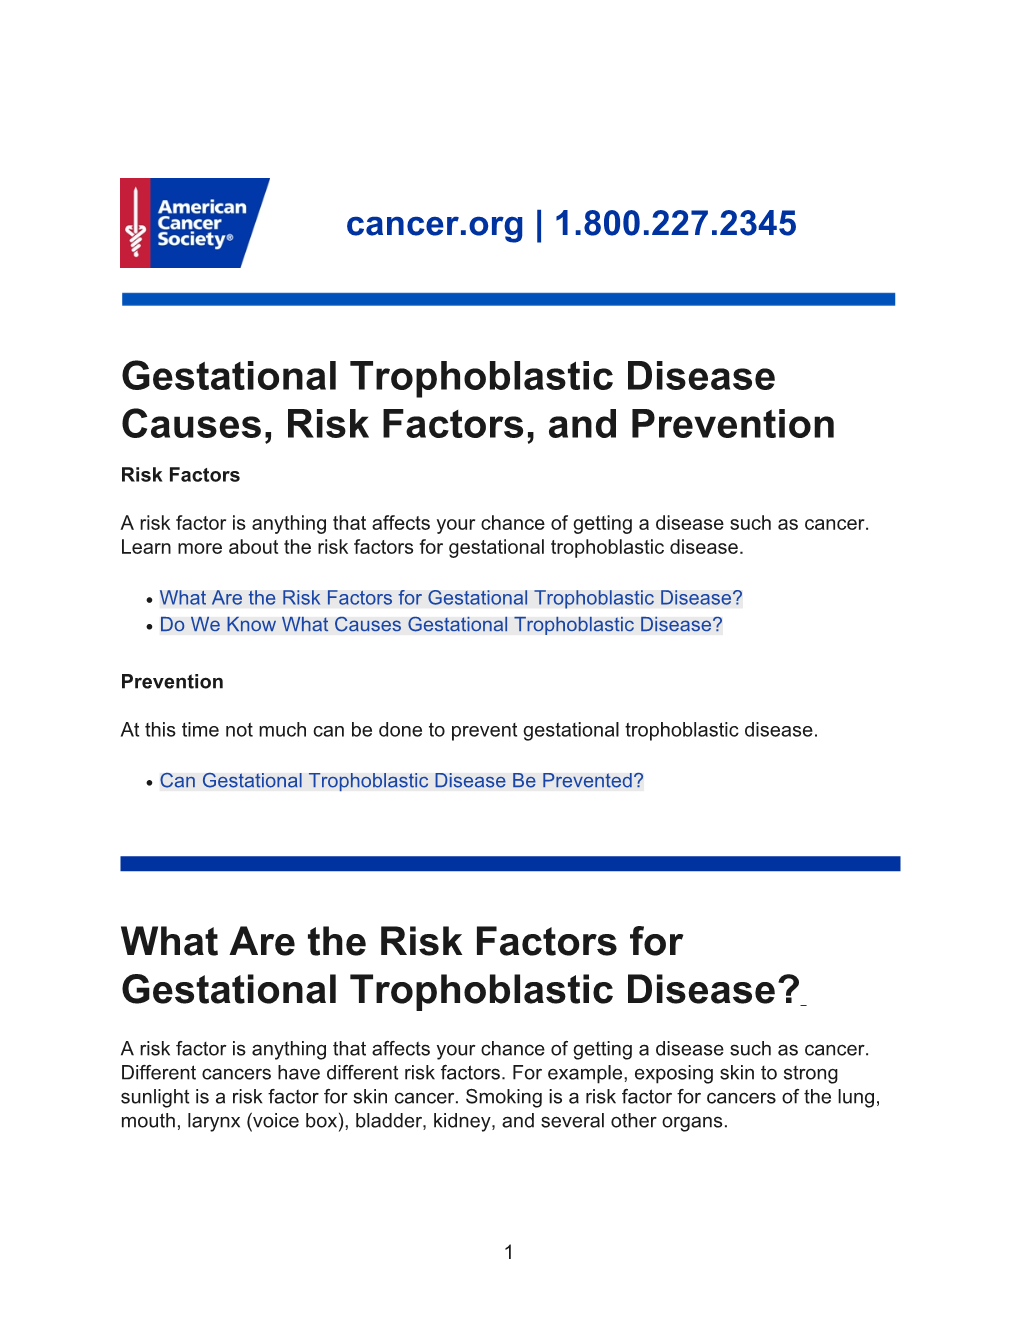 Gestational Trophoblastic Disease Causes, Risk Factors, and Prevention Risk Factors